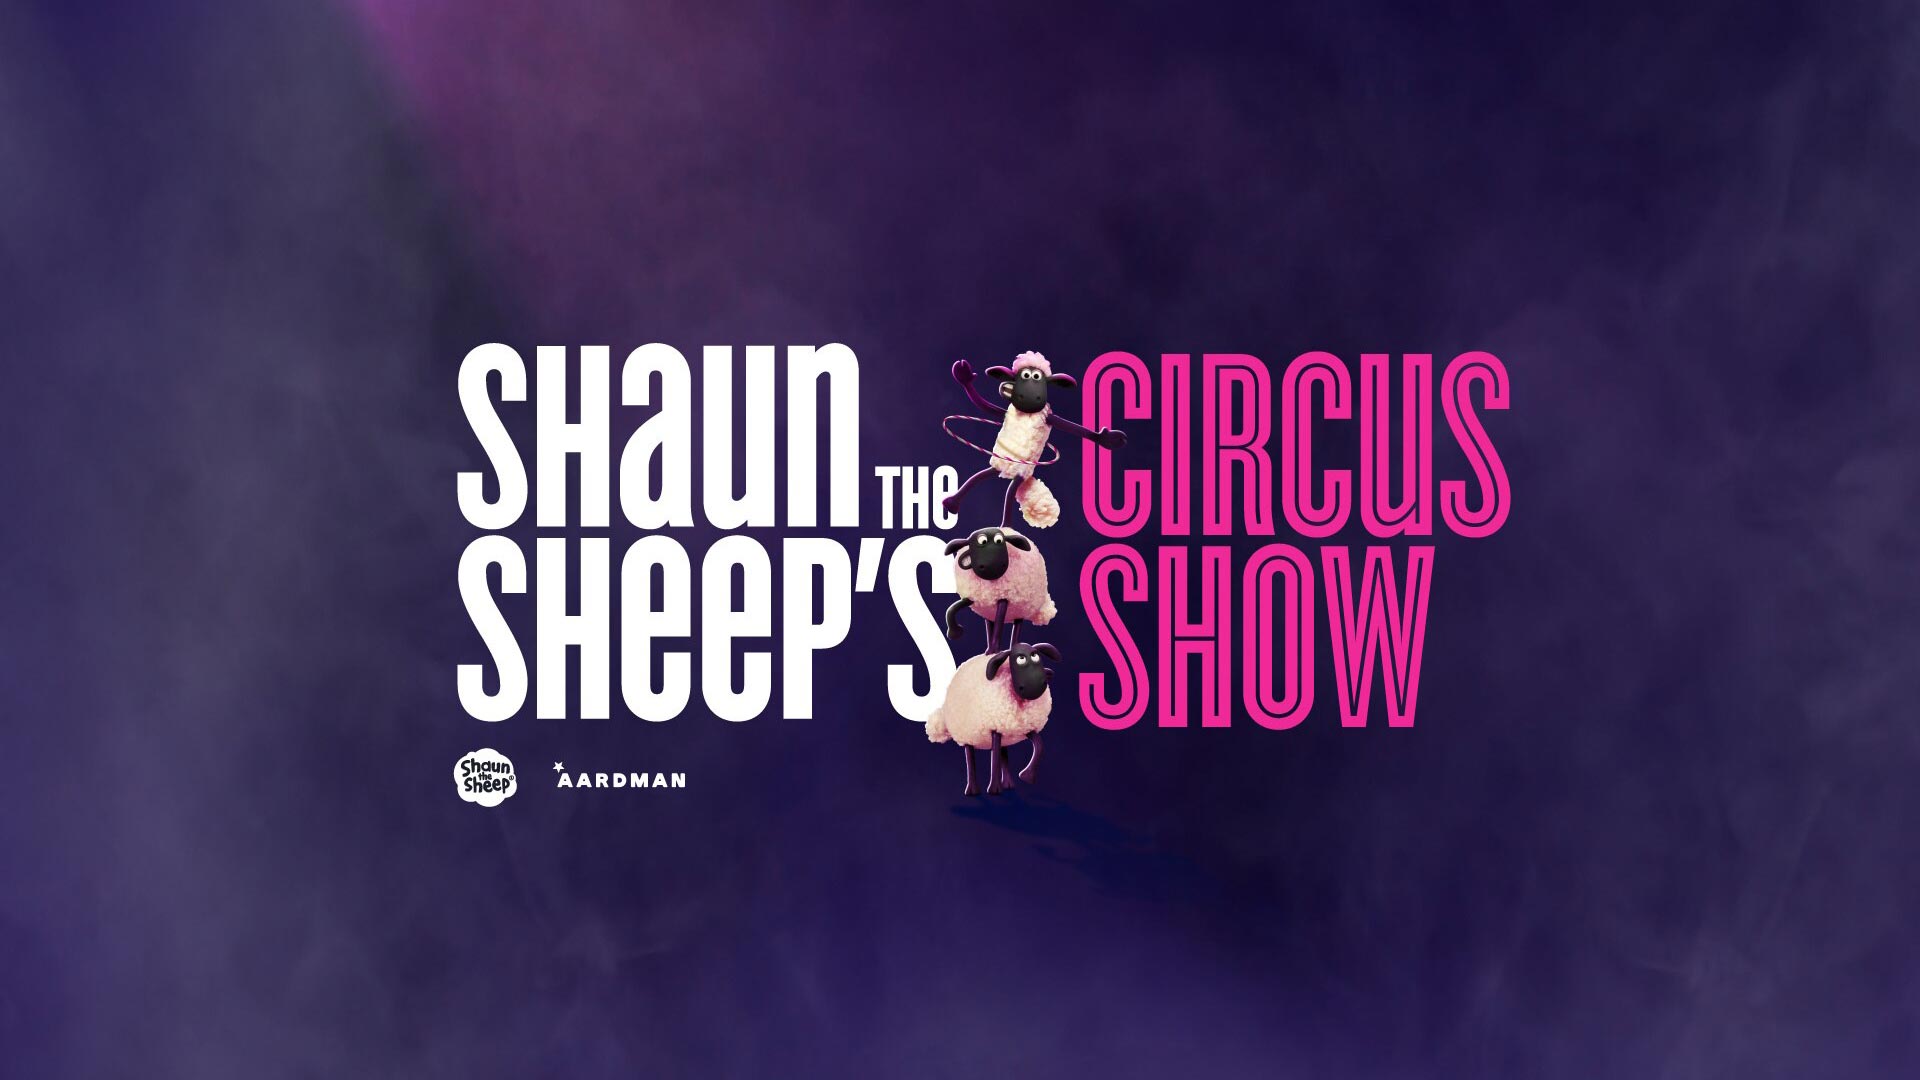 Shaun the Sheep's Circus Show